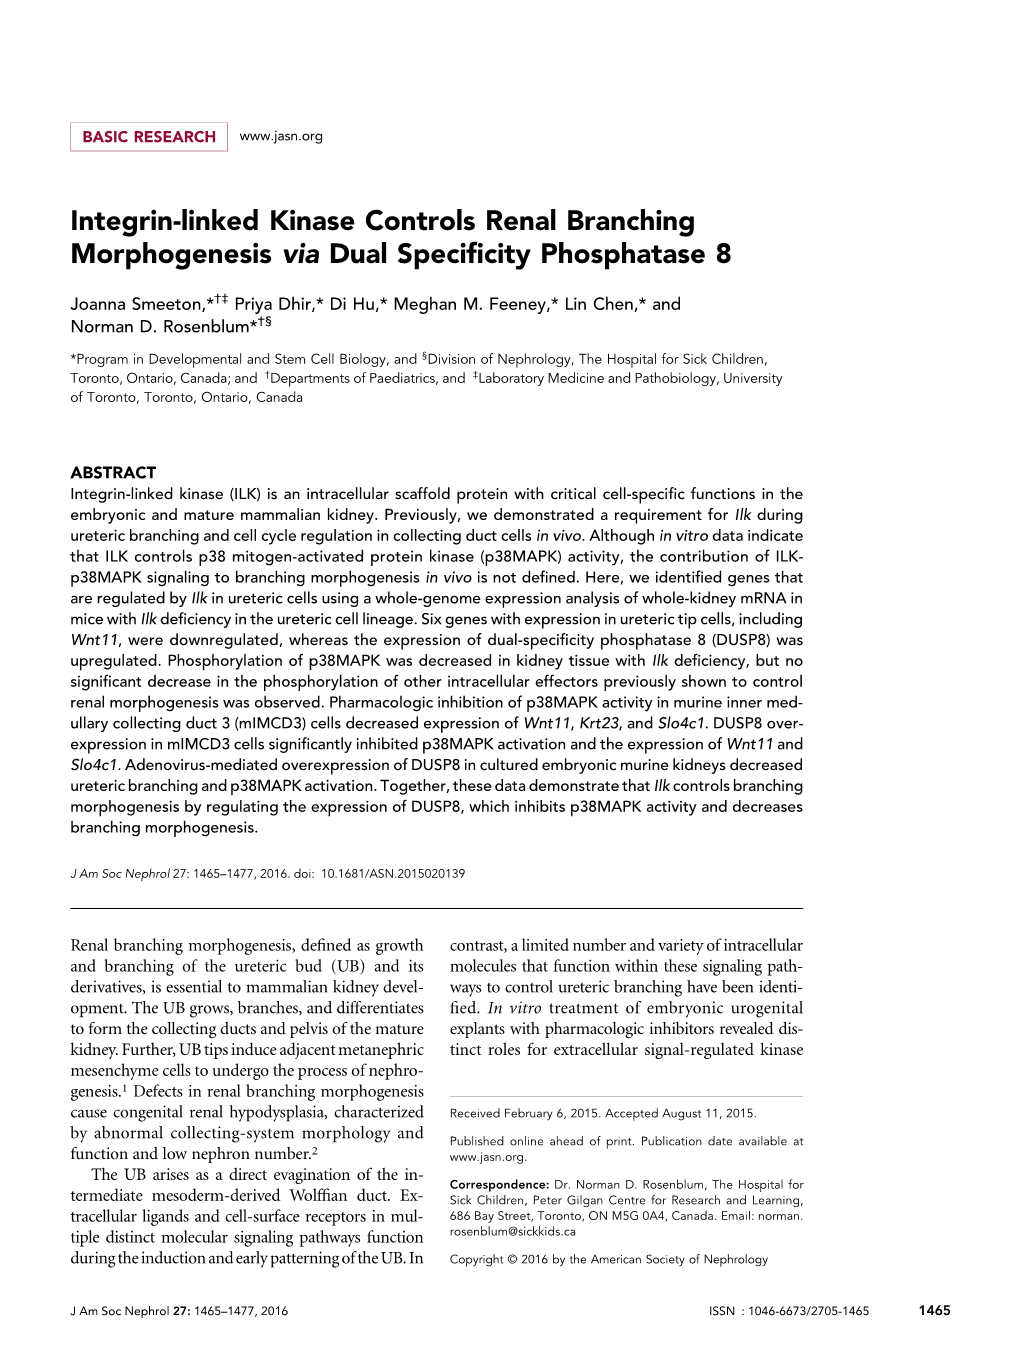 Integrin-Linked Kinase Controls Renal Branching Morphogenesis Via Dual Speciﬁcity Phosphatase 8